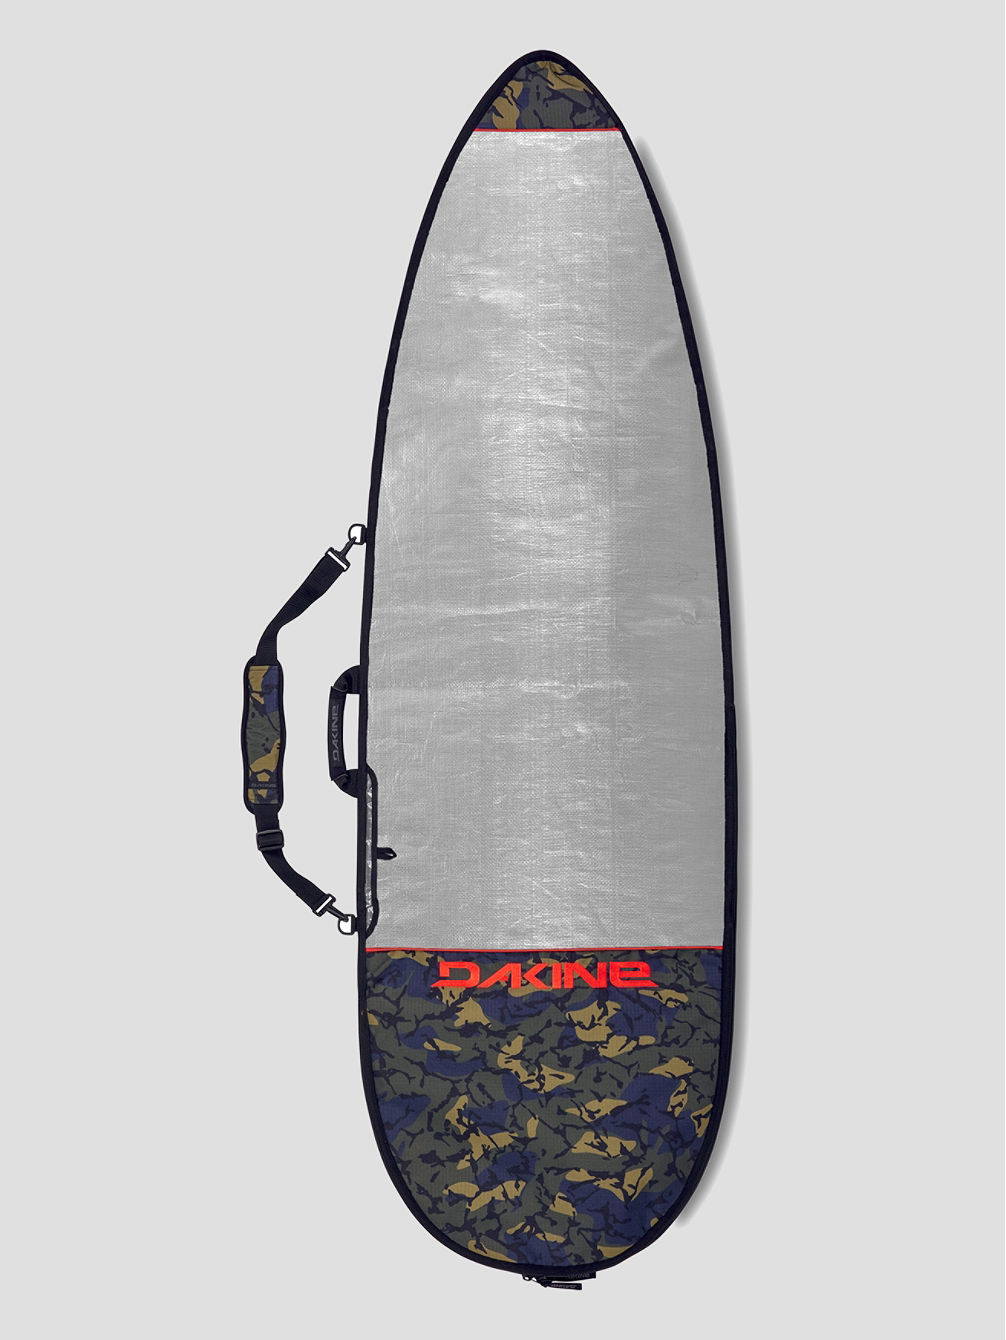 Daylight Thruster 5.4 Saco de Prancha de Surf